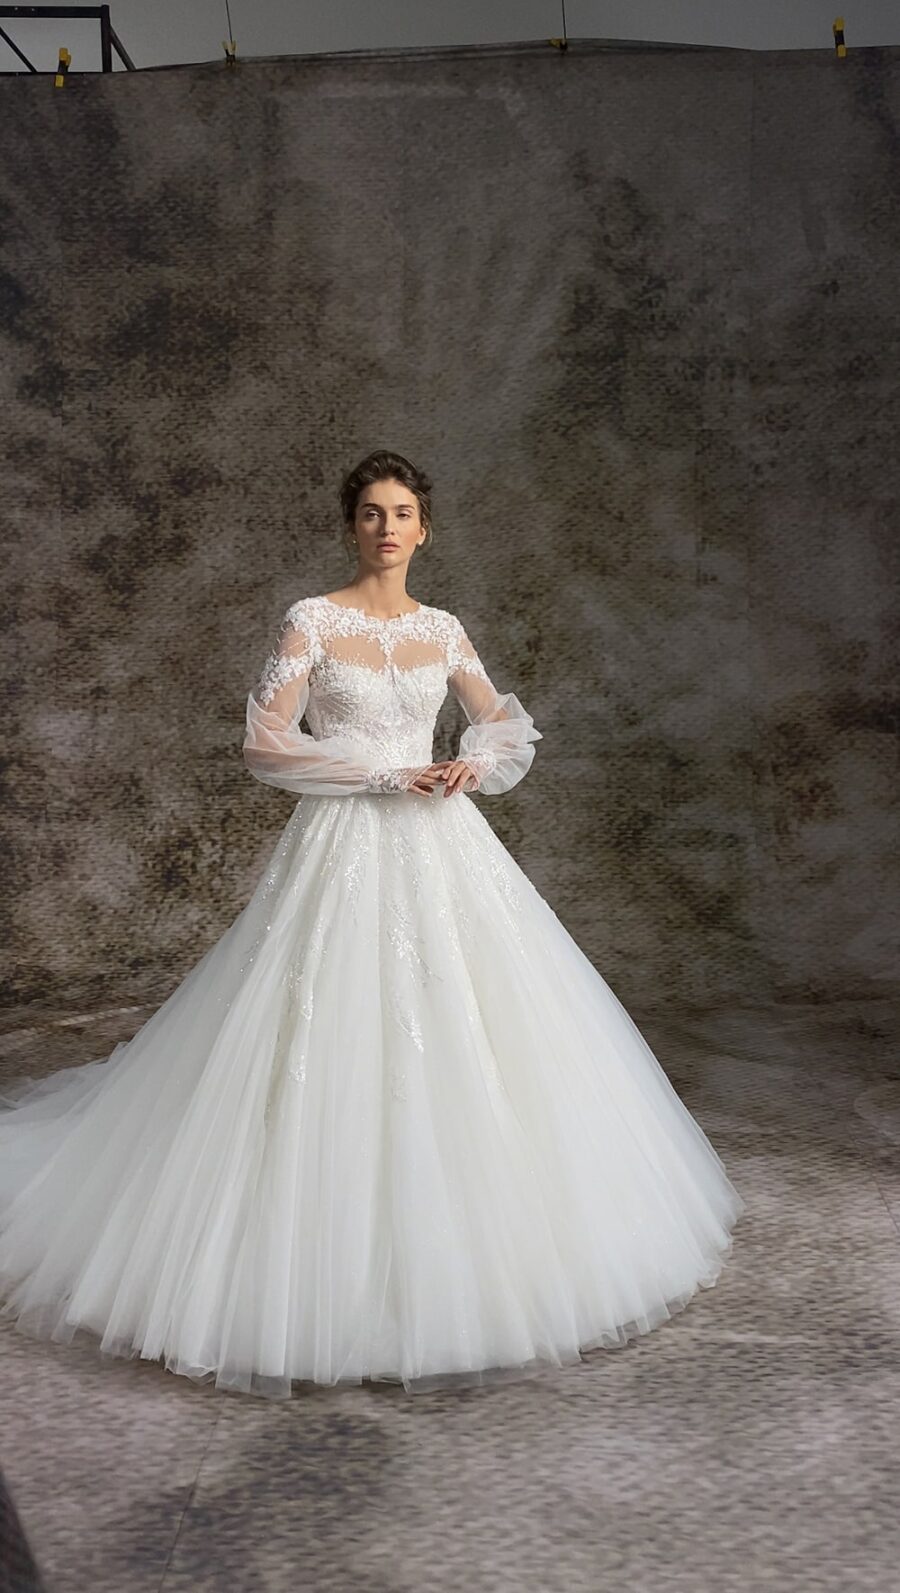 Uma 2 wedding dress by woná concept from notte d'opera collection